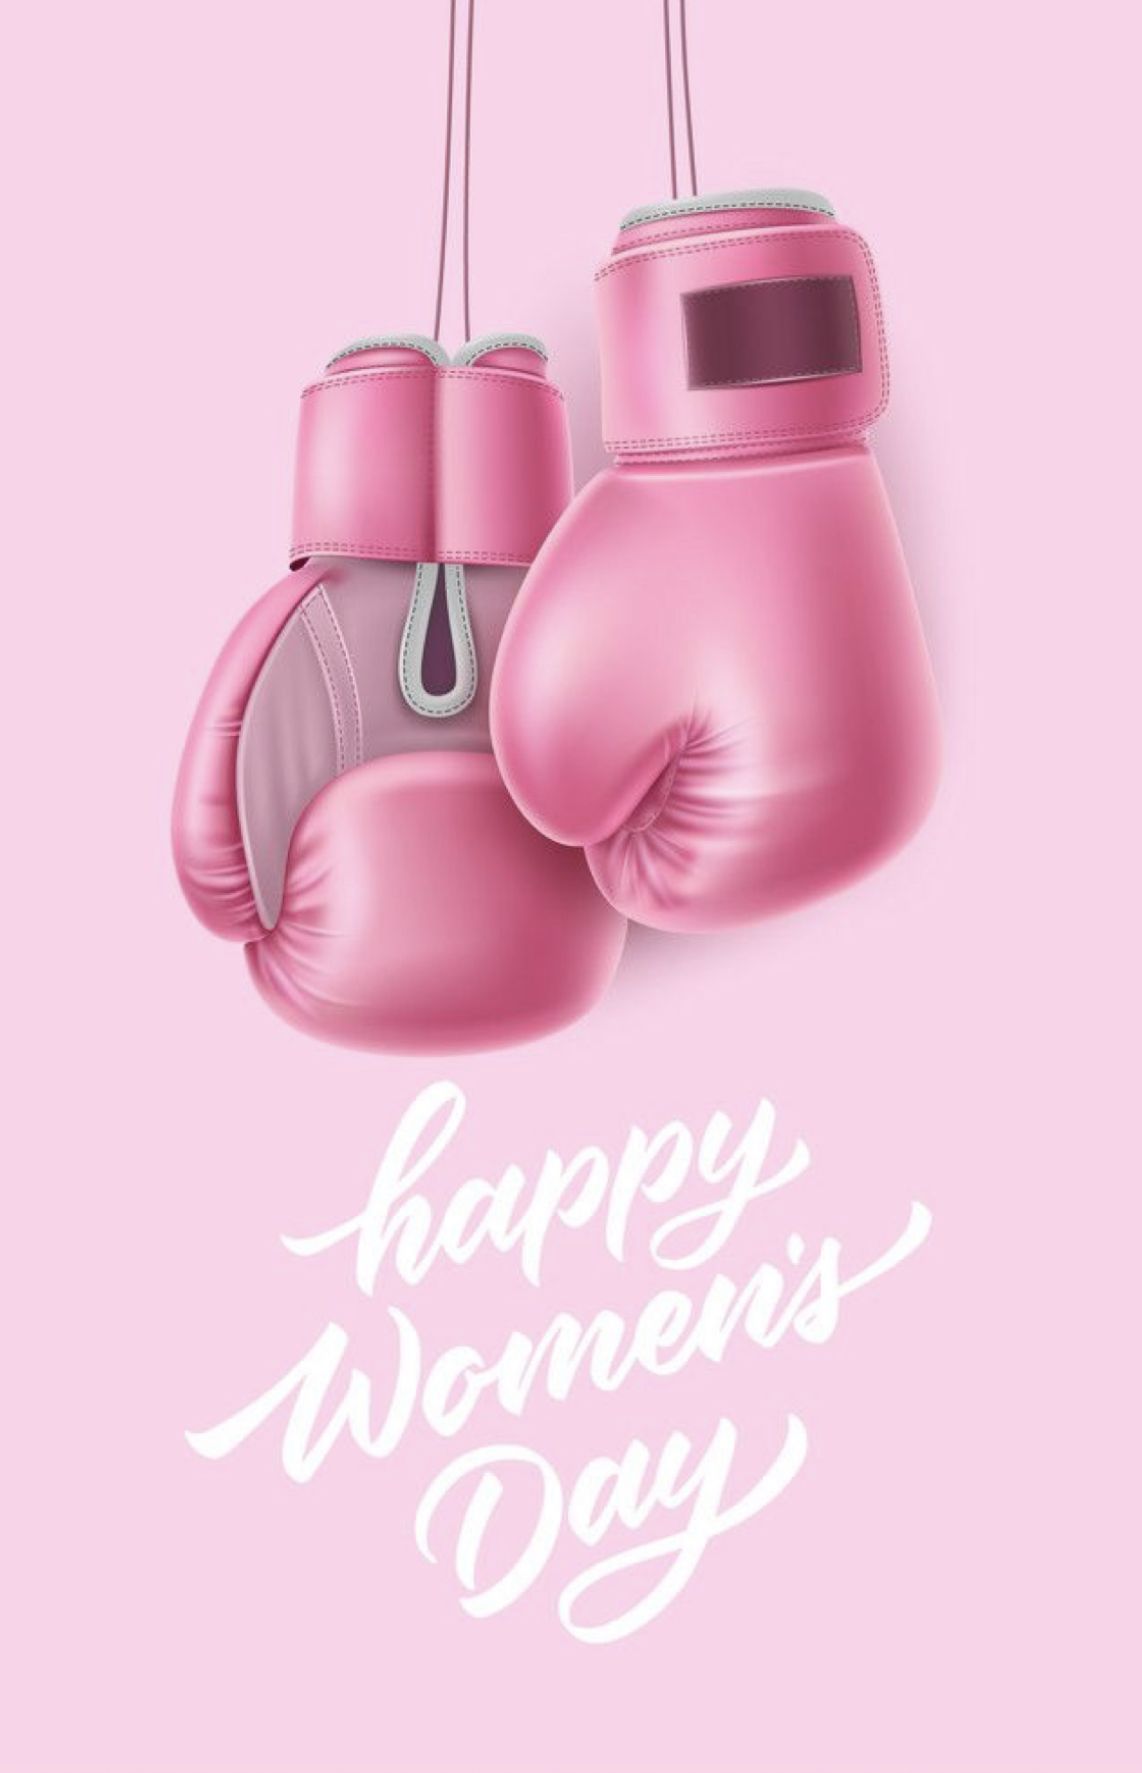 8th March women's day.com.au